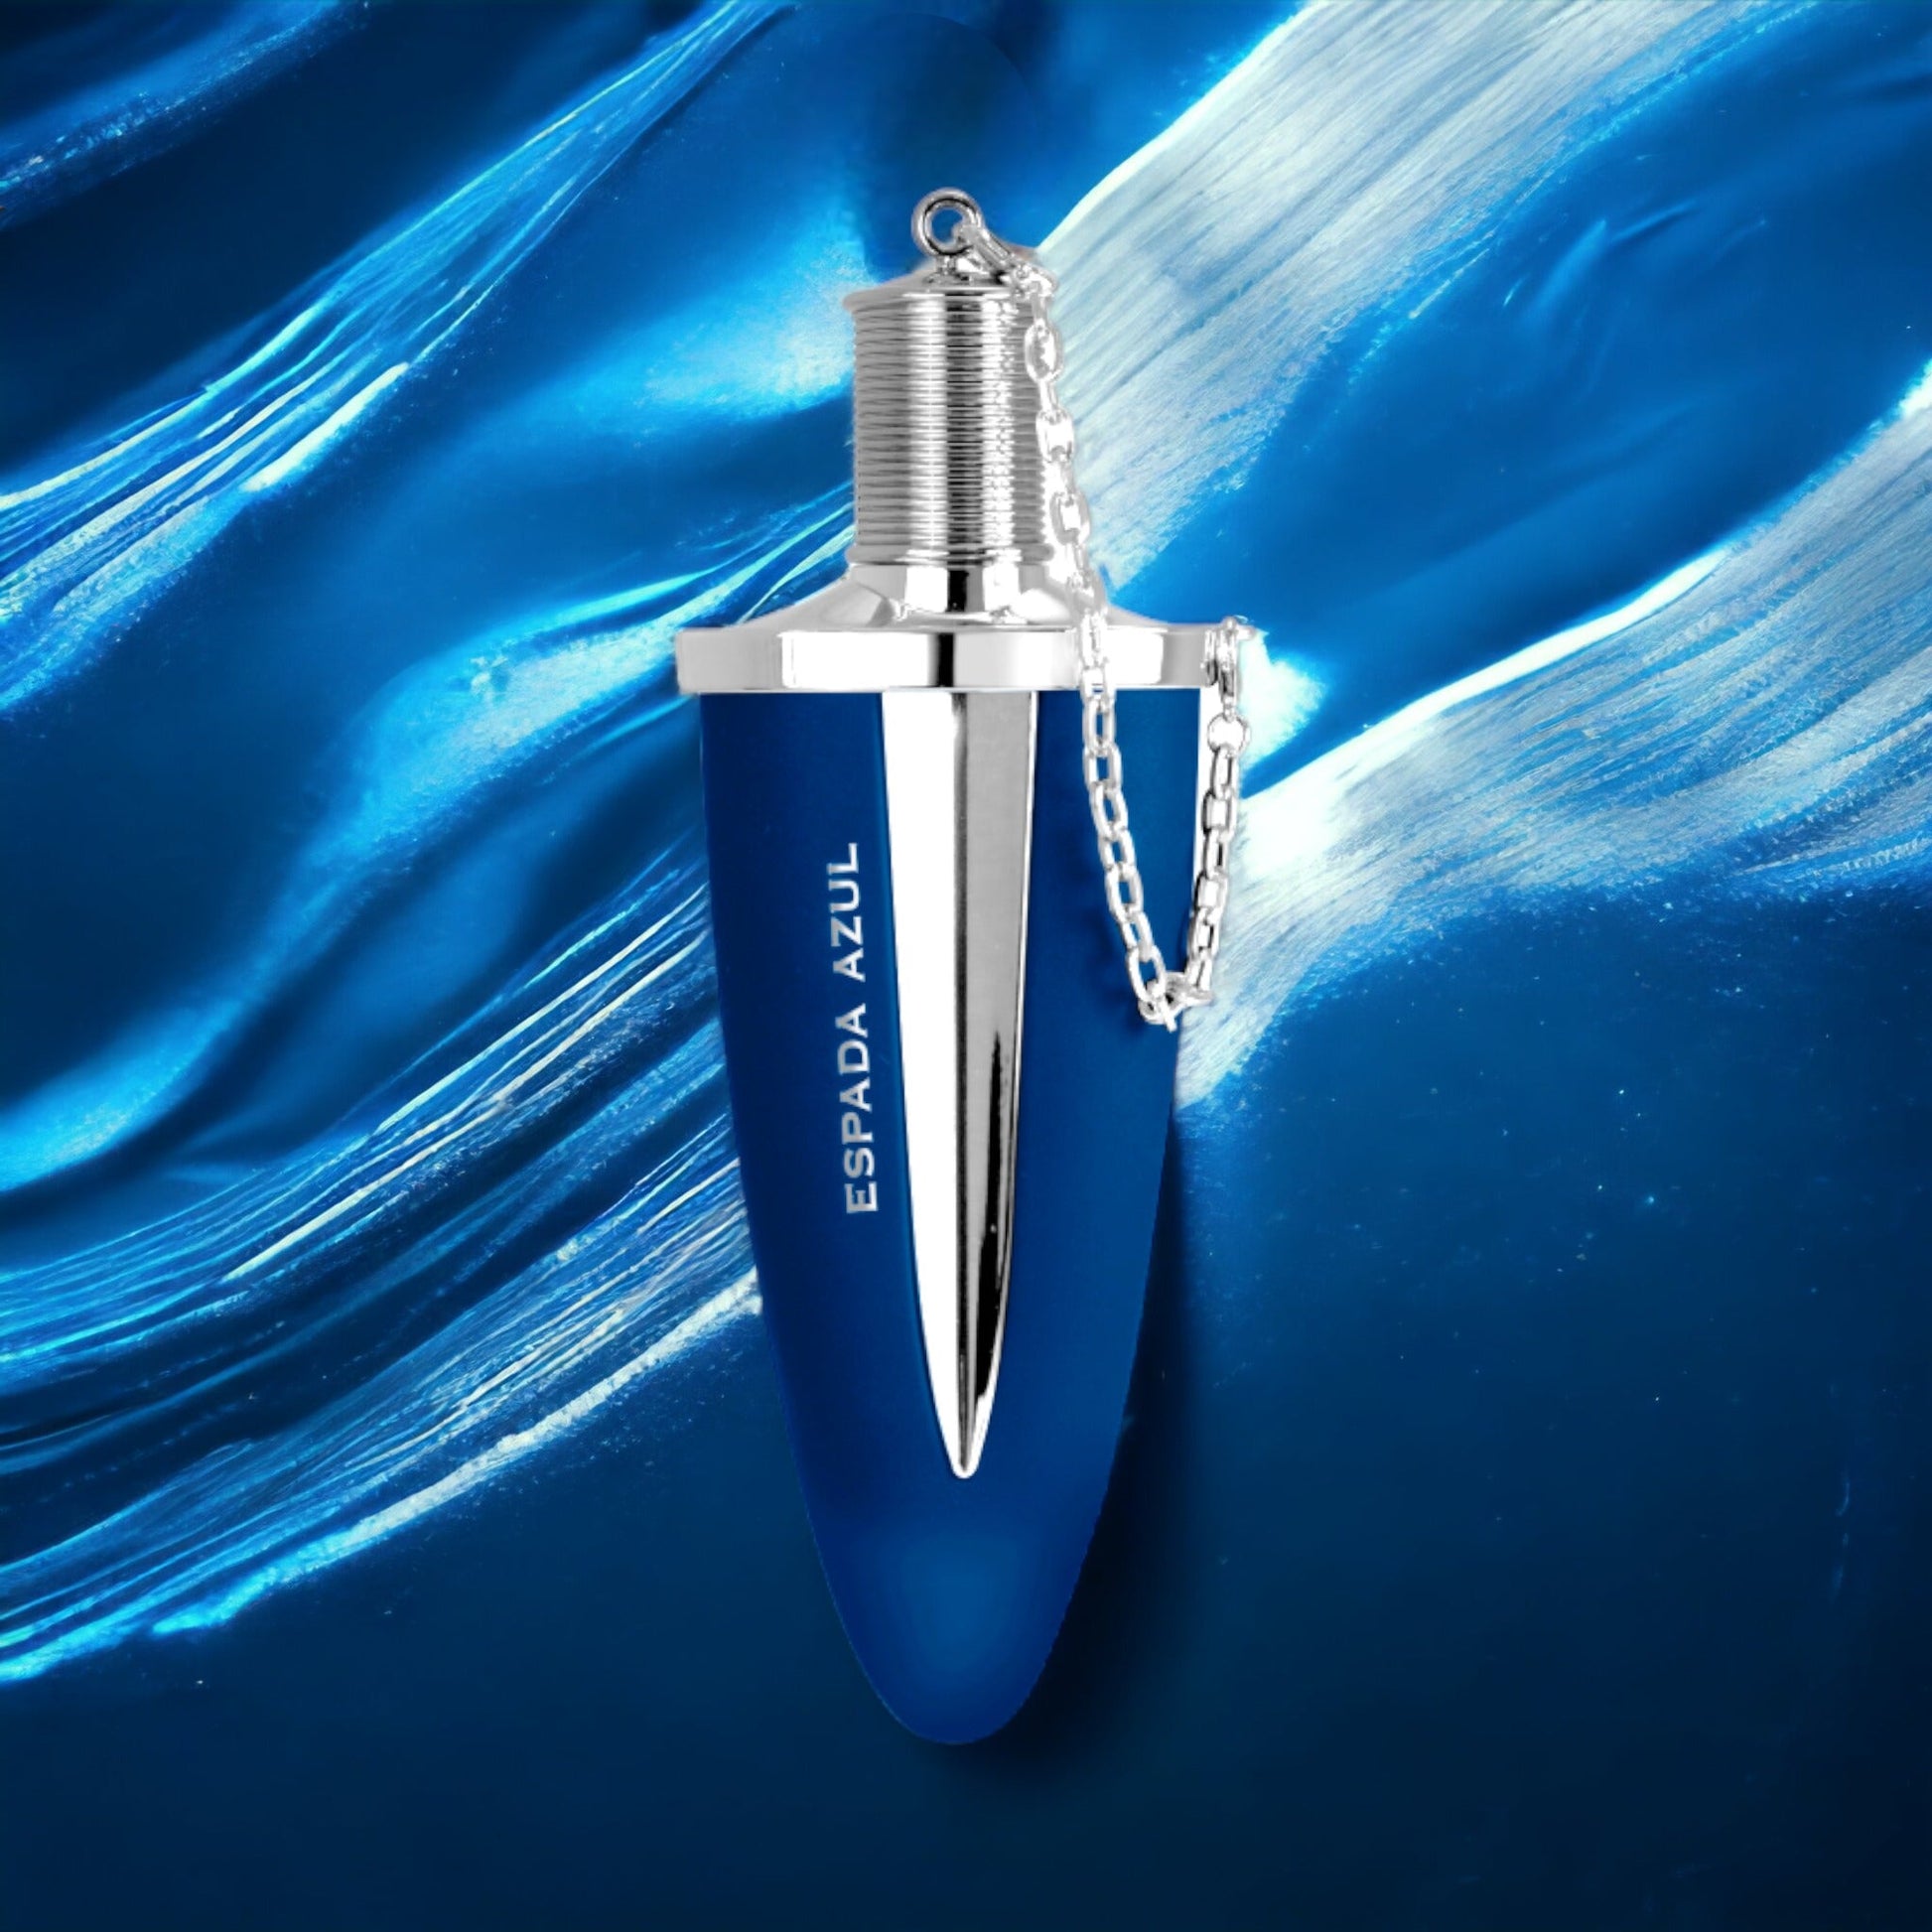 Espada Azul by Le Chameau Eau de Parfum Spray 3.4 Oz Men